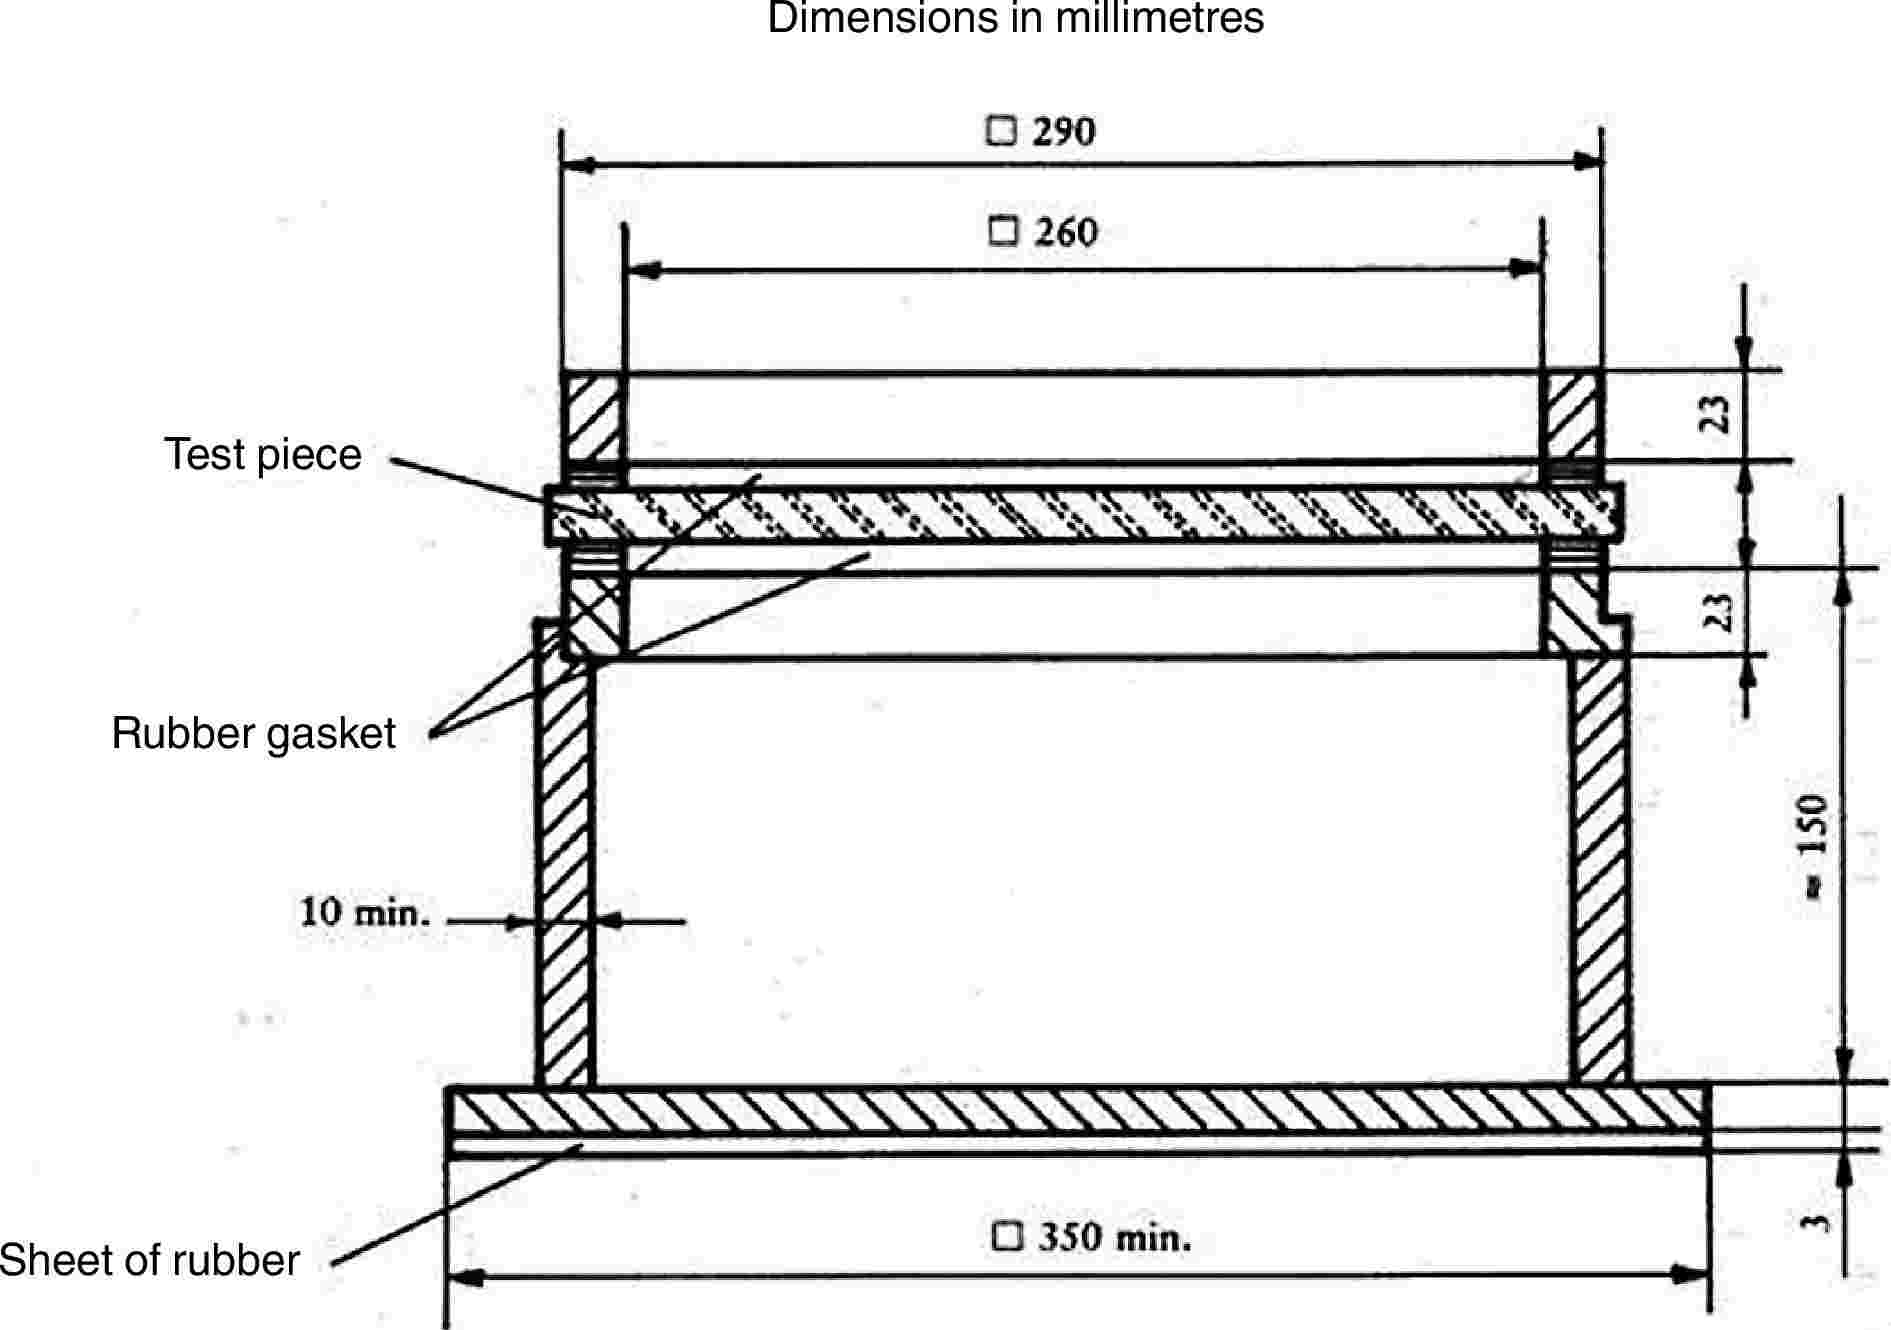 Dimensions in millimetresTest pieceRubber gasketSheet of rubber